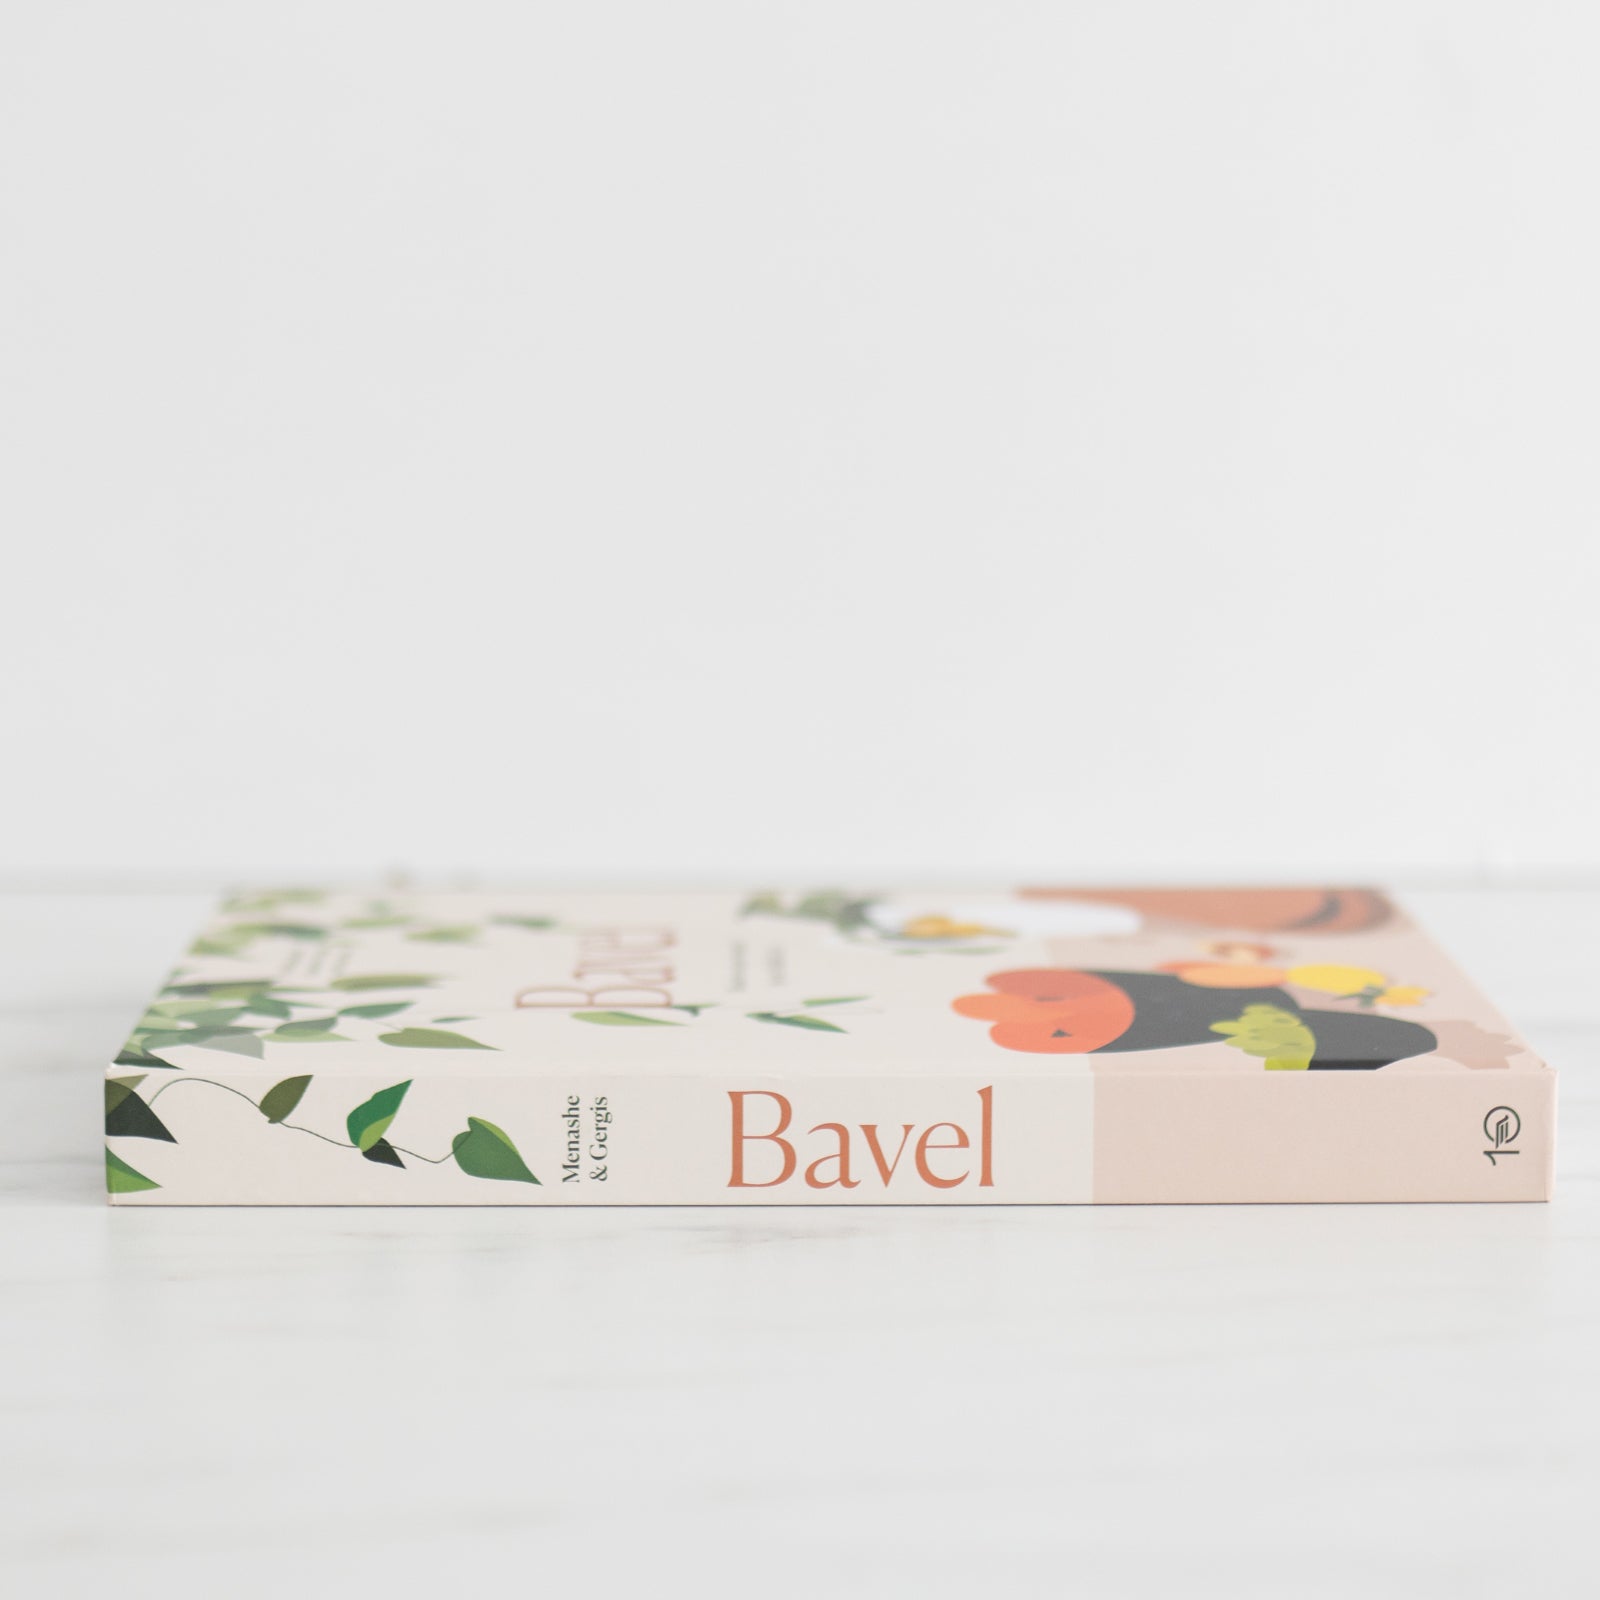 "Bavel" by Ori Menashe, Genevieve Gergis, Lesley Suter - Rug & Weave